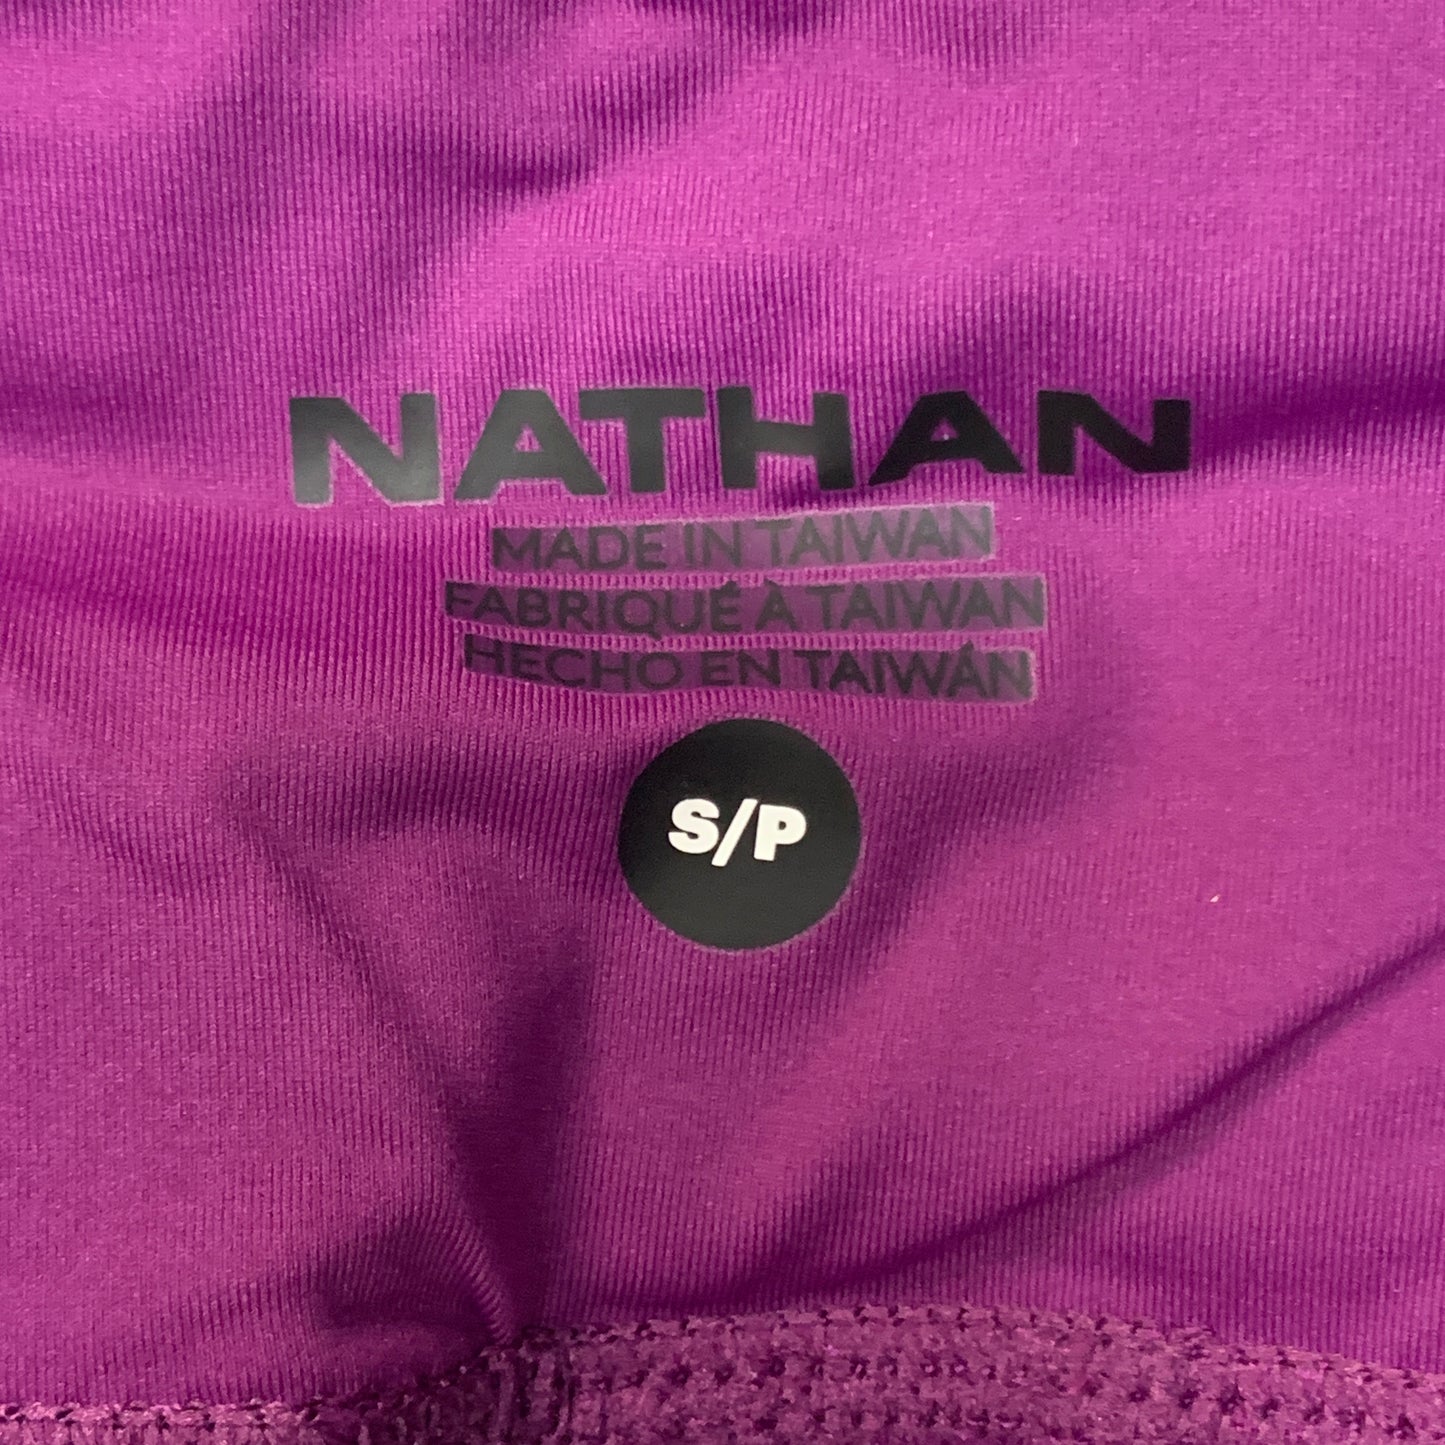 NATHAN Interval 3" Inseam Bike Short Women's Plum Size S NS51040-70030-S